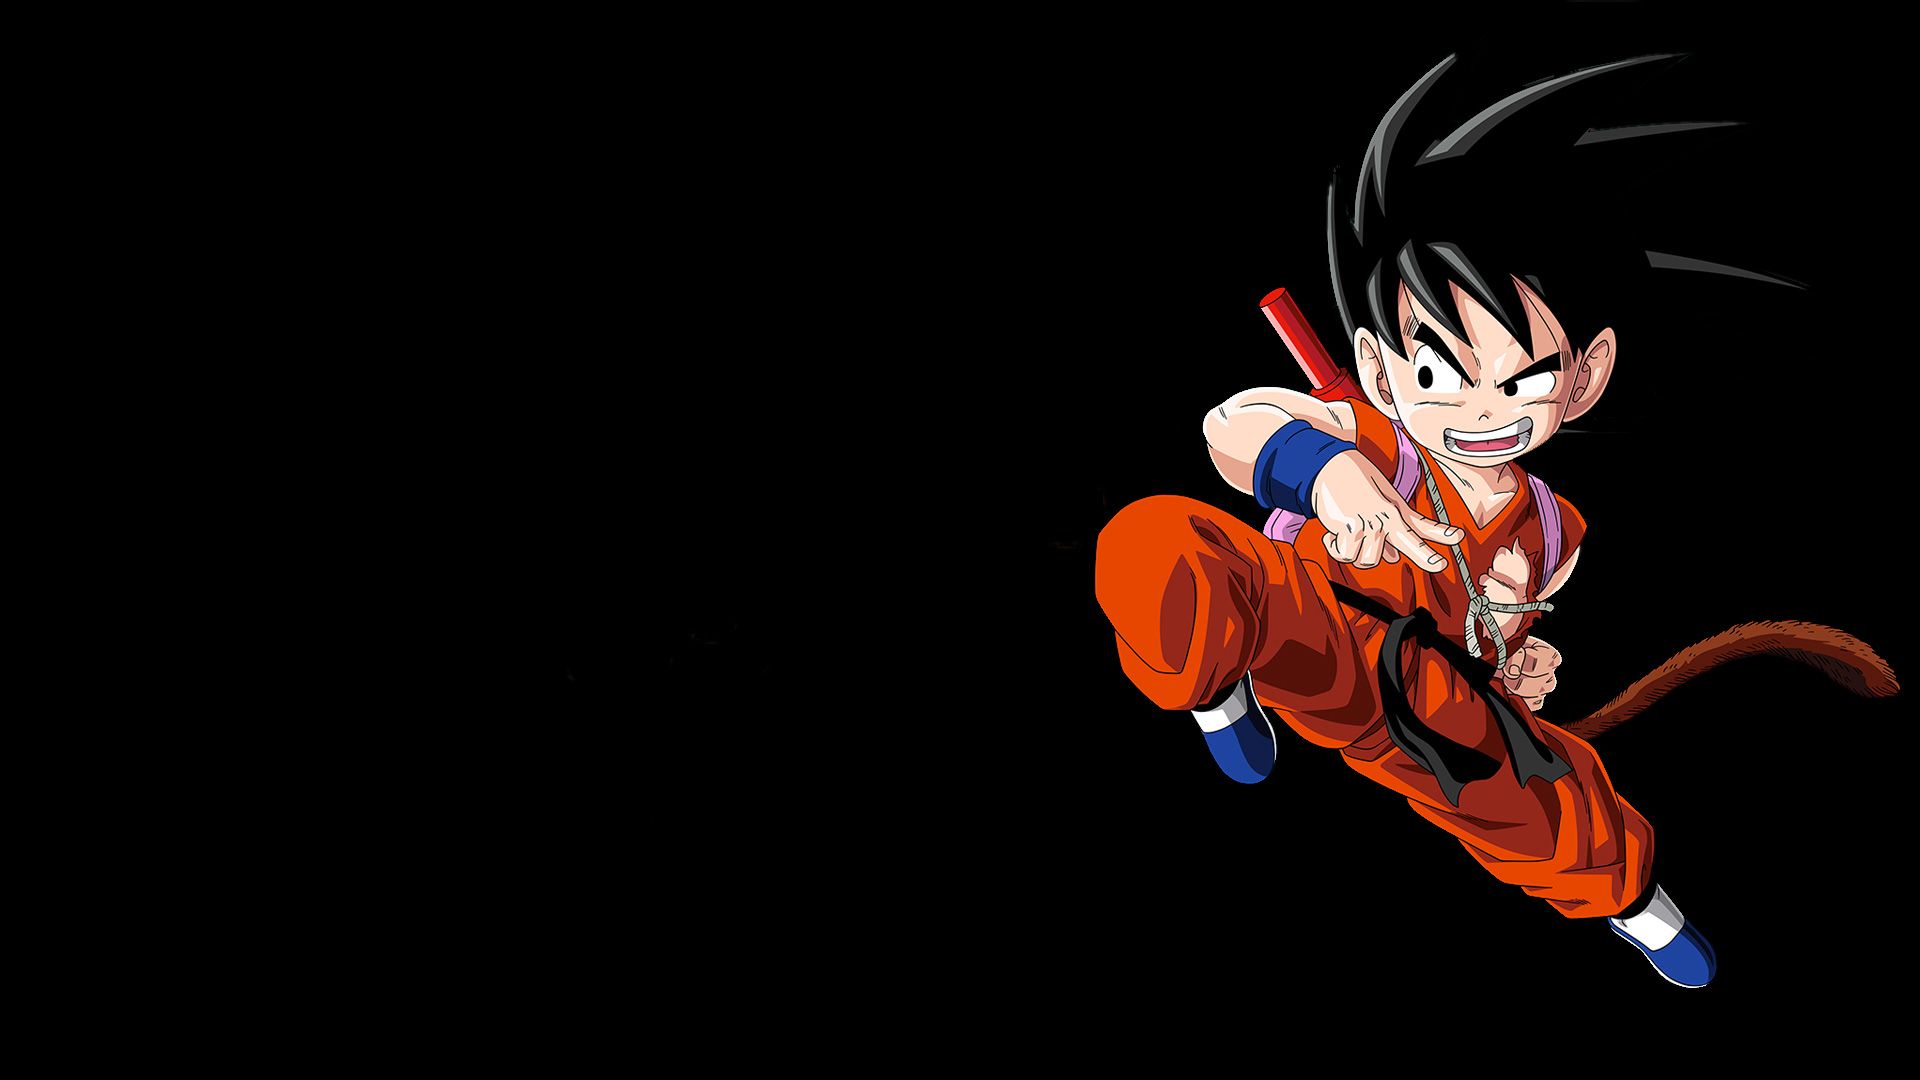 Goku Archives - Live Desktop Wallpapers